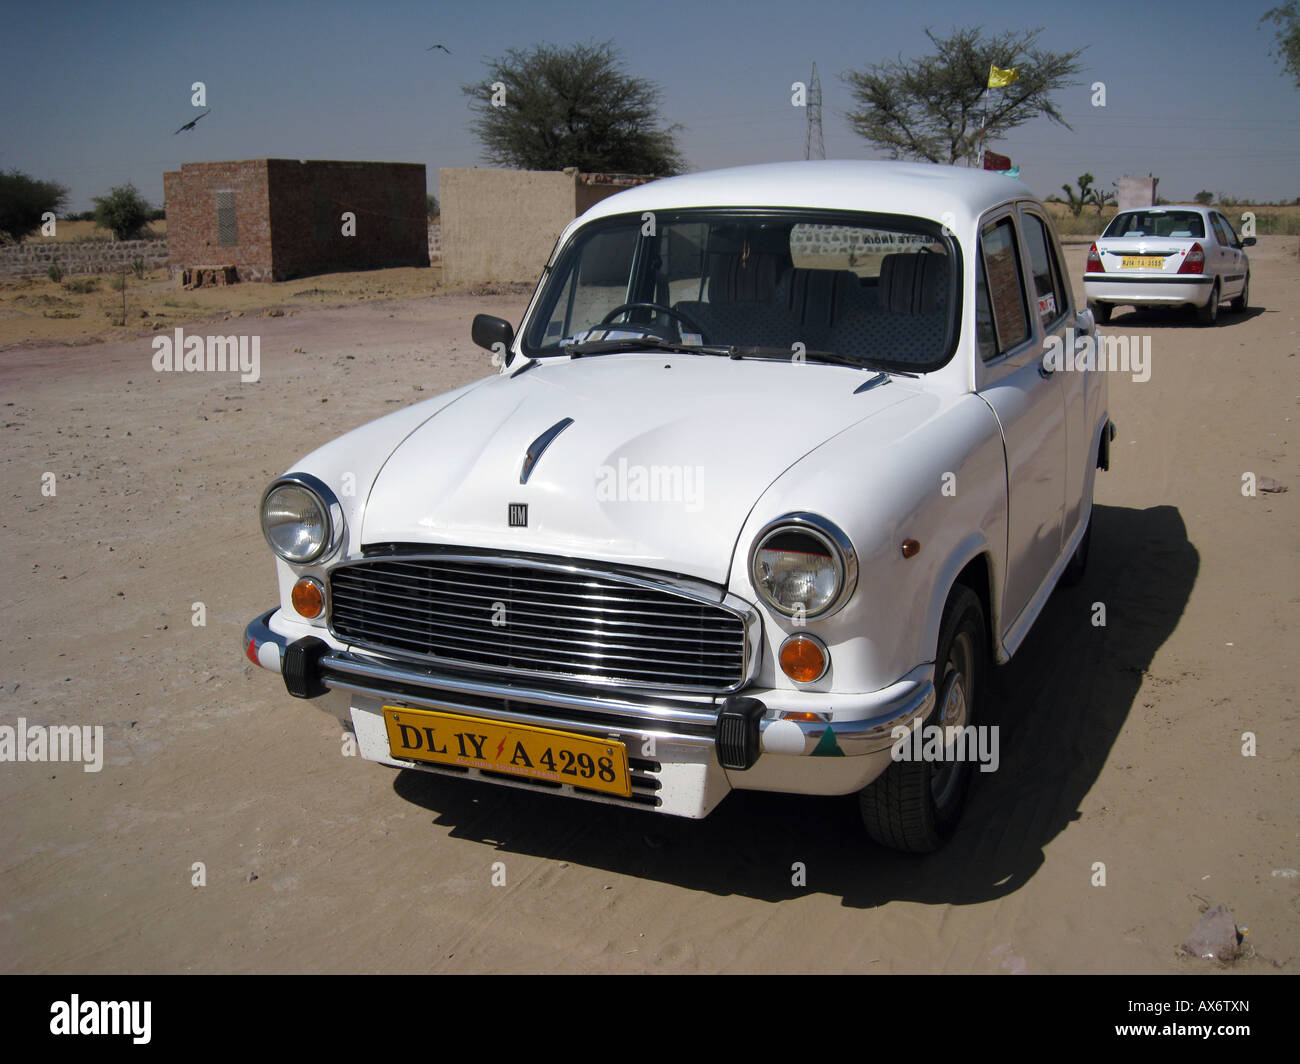 ambassador taxi in india Stock Photo